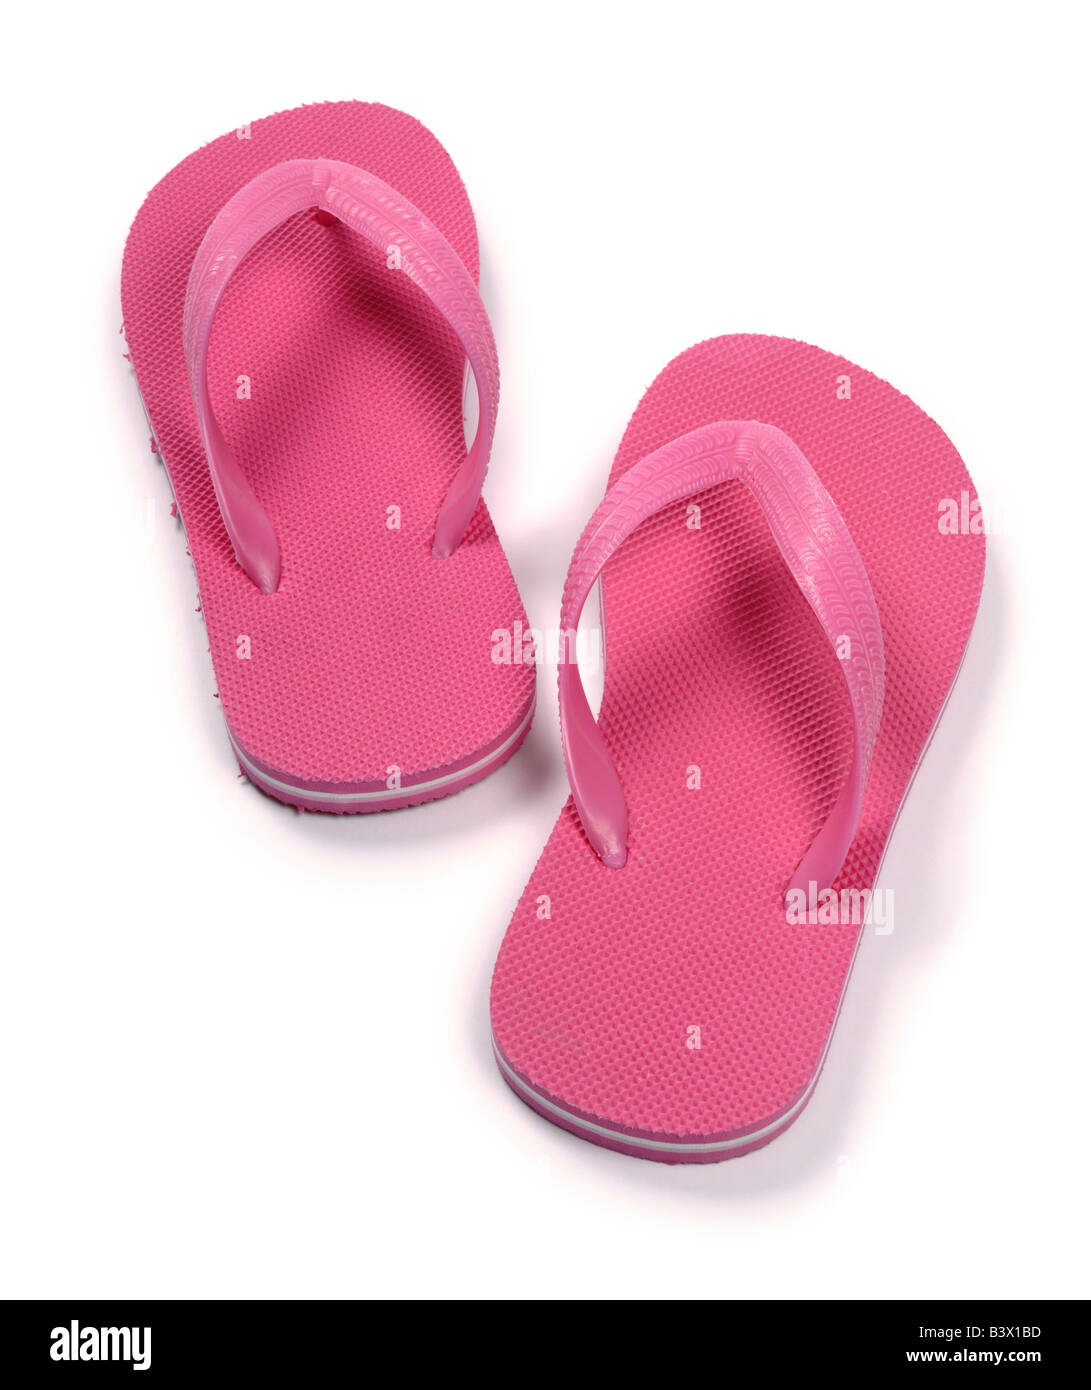 Pink flip flops Stock Photo - Alamy